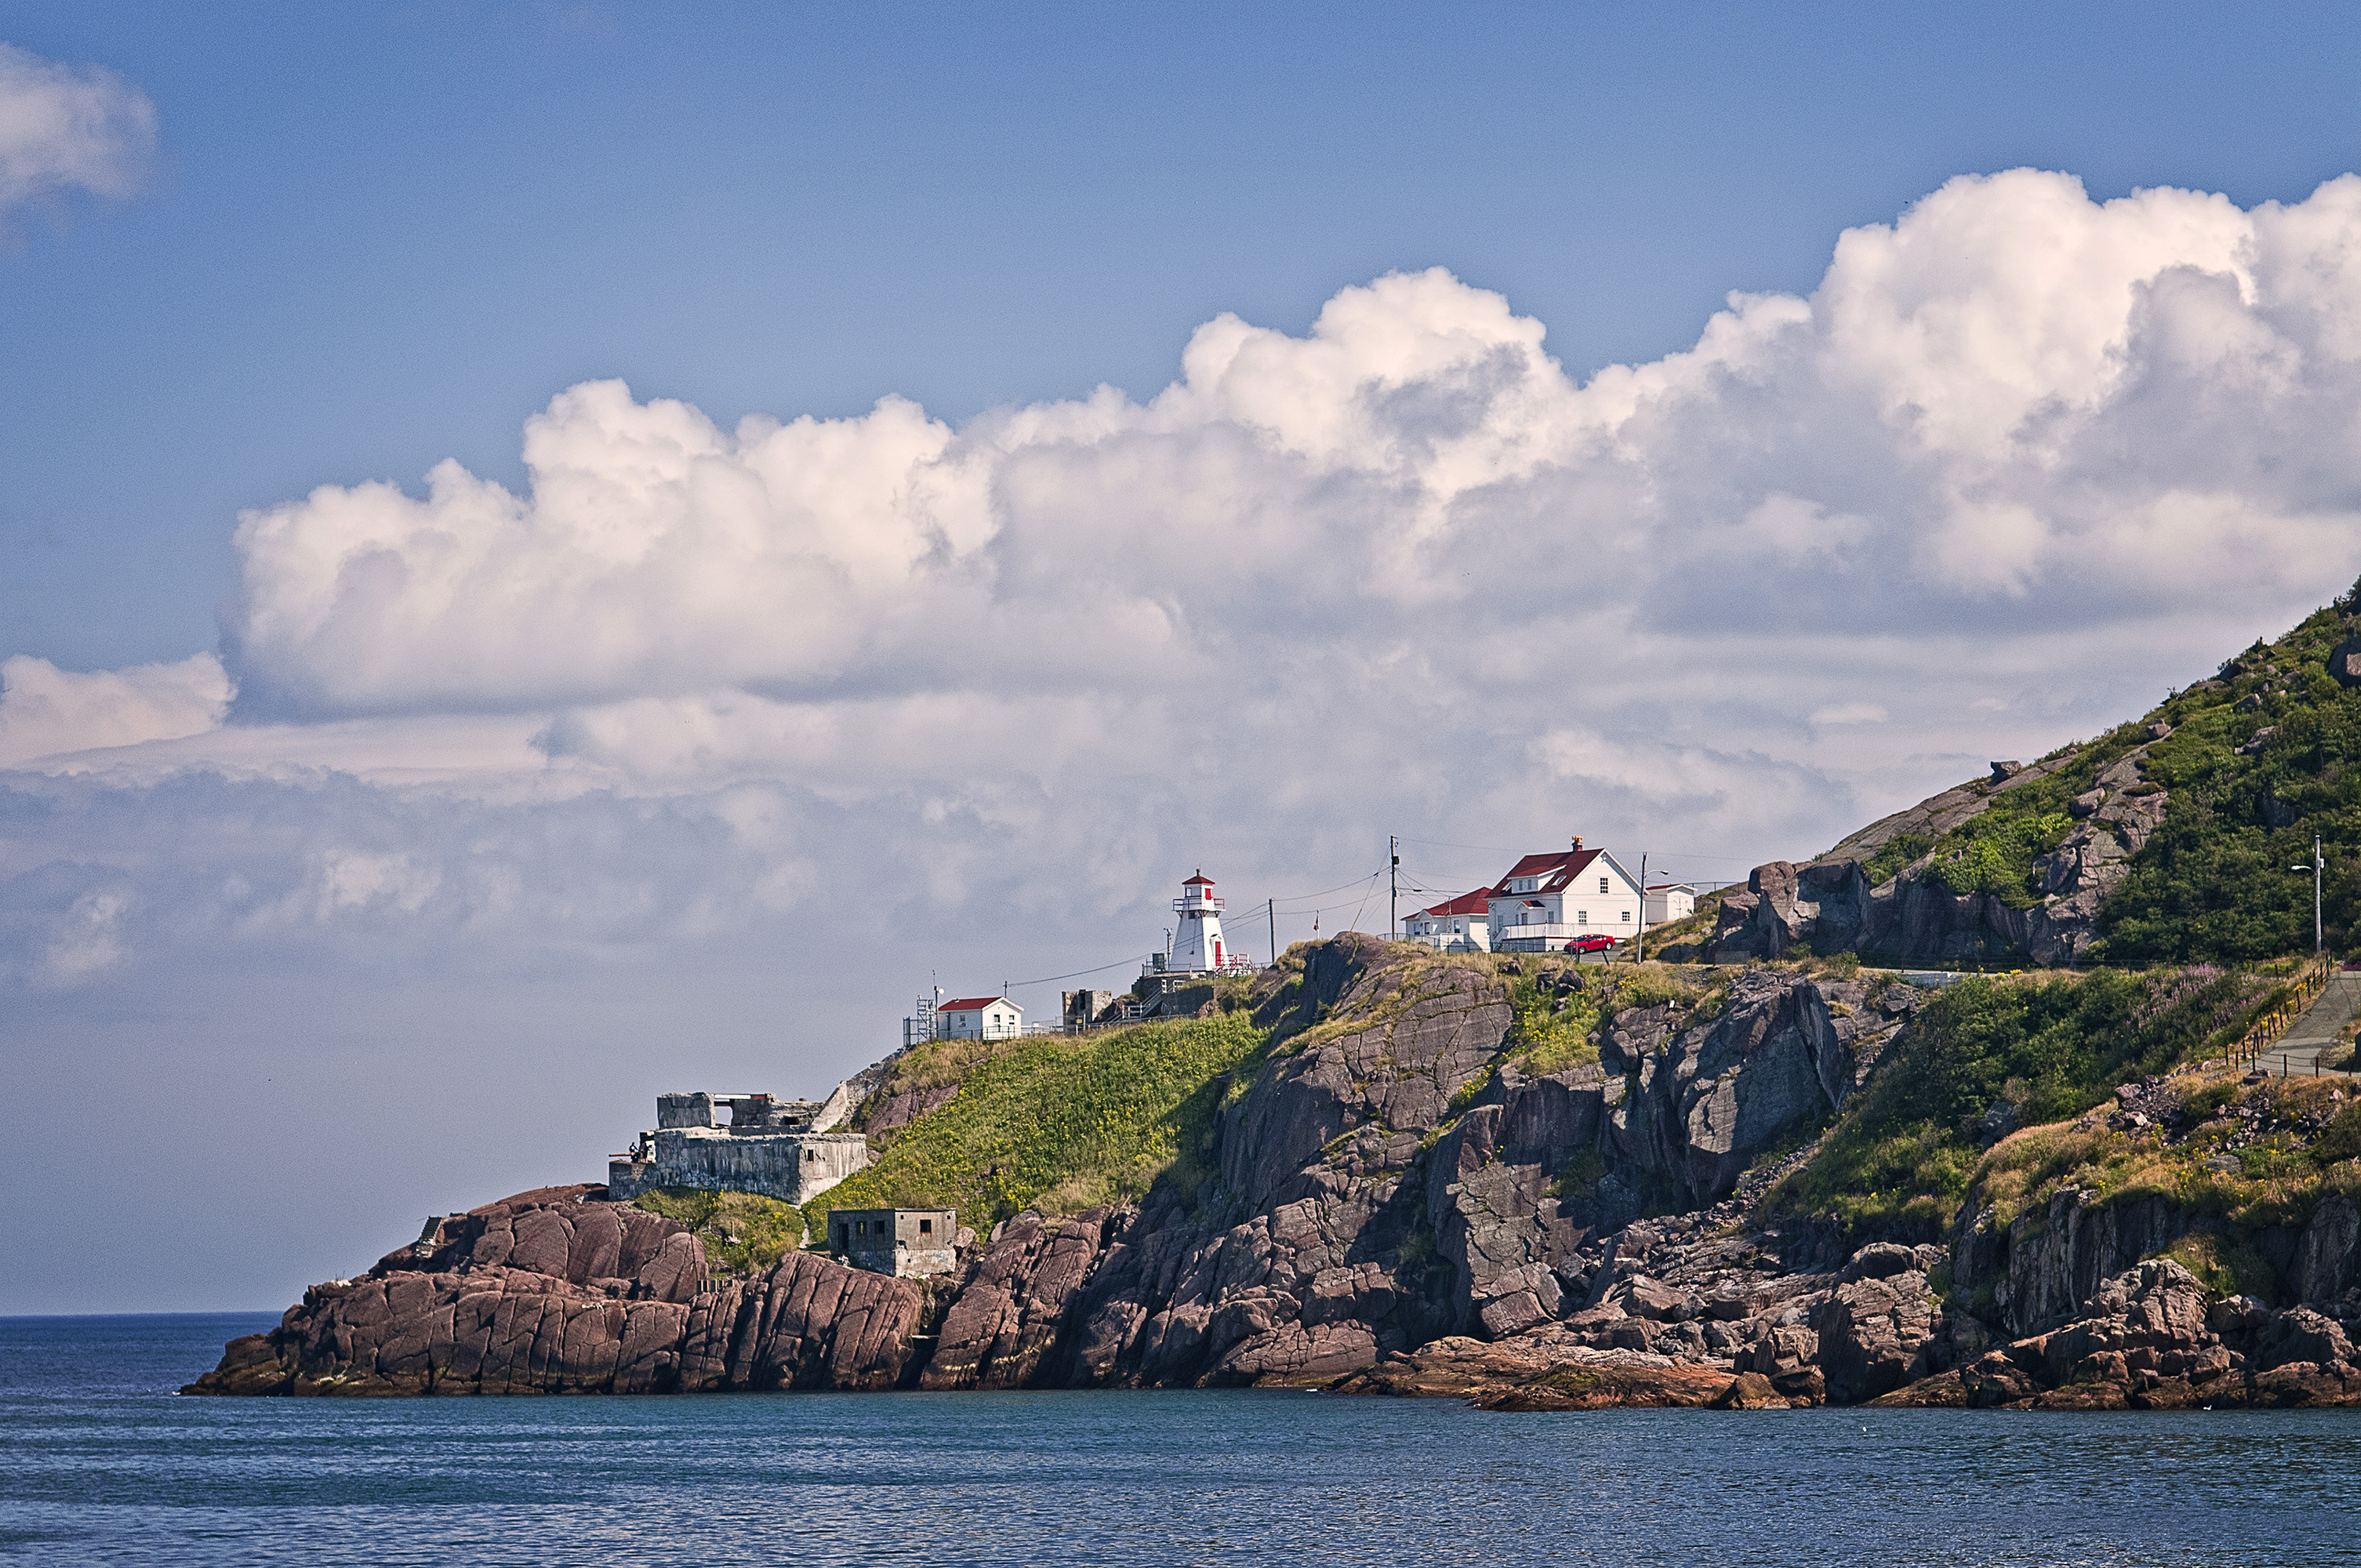 Lighthouses of Avalon Photo Tour - Far East Photography Tours, St. John's, Newfoundland & Labrador